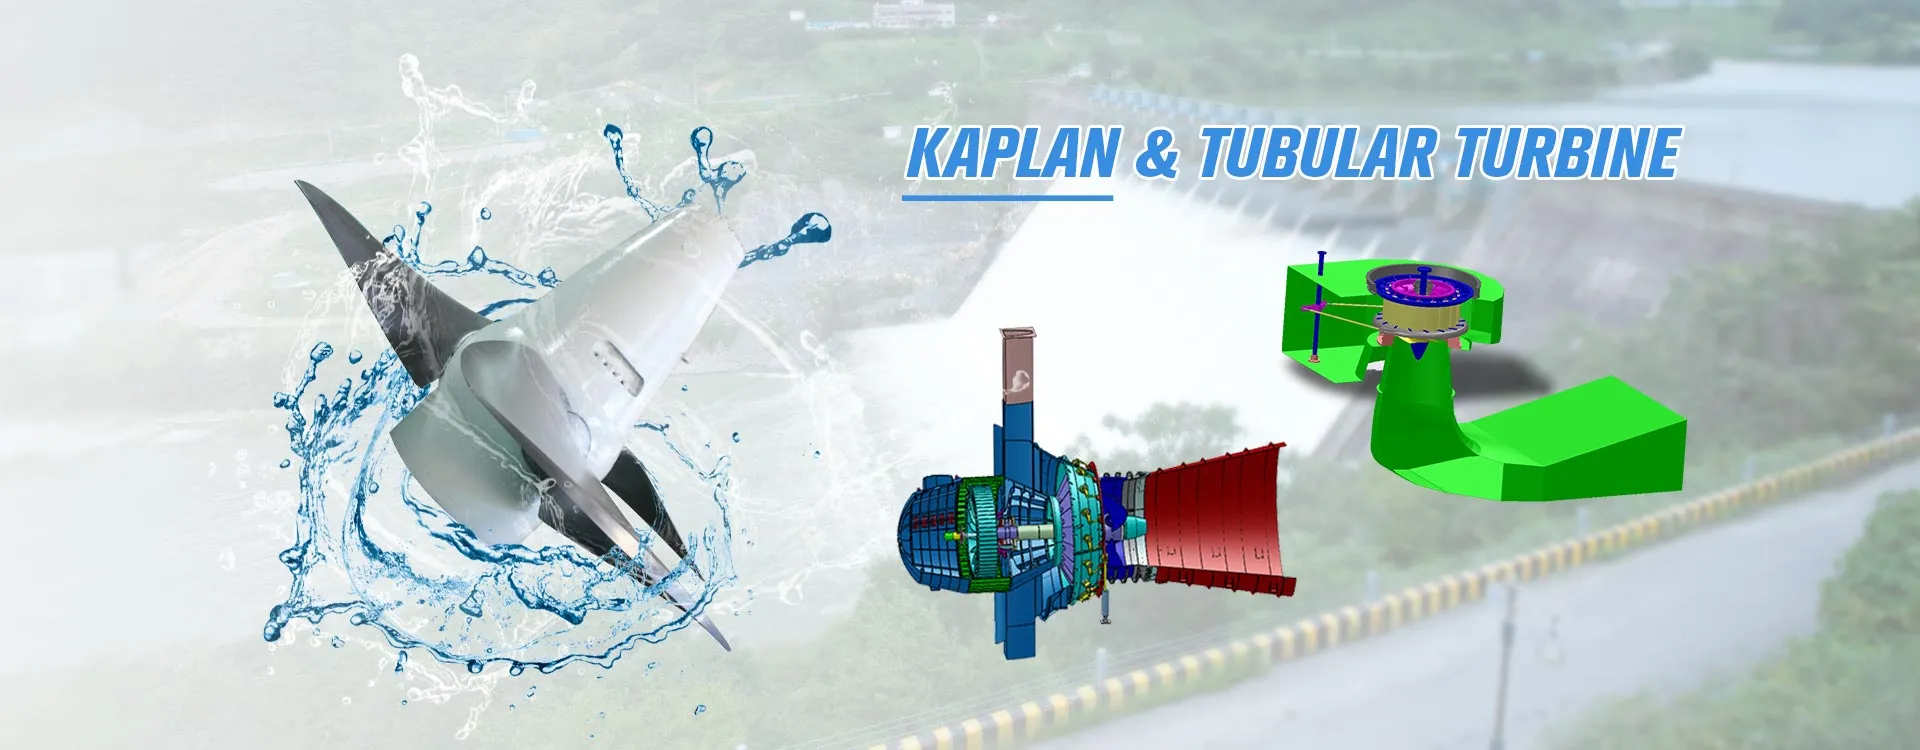 Kaplan & Tubular Turbine